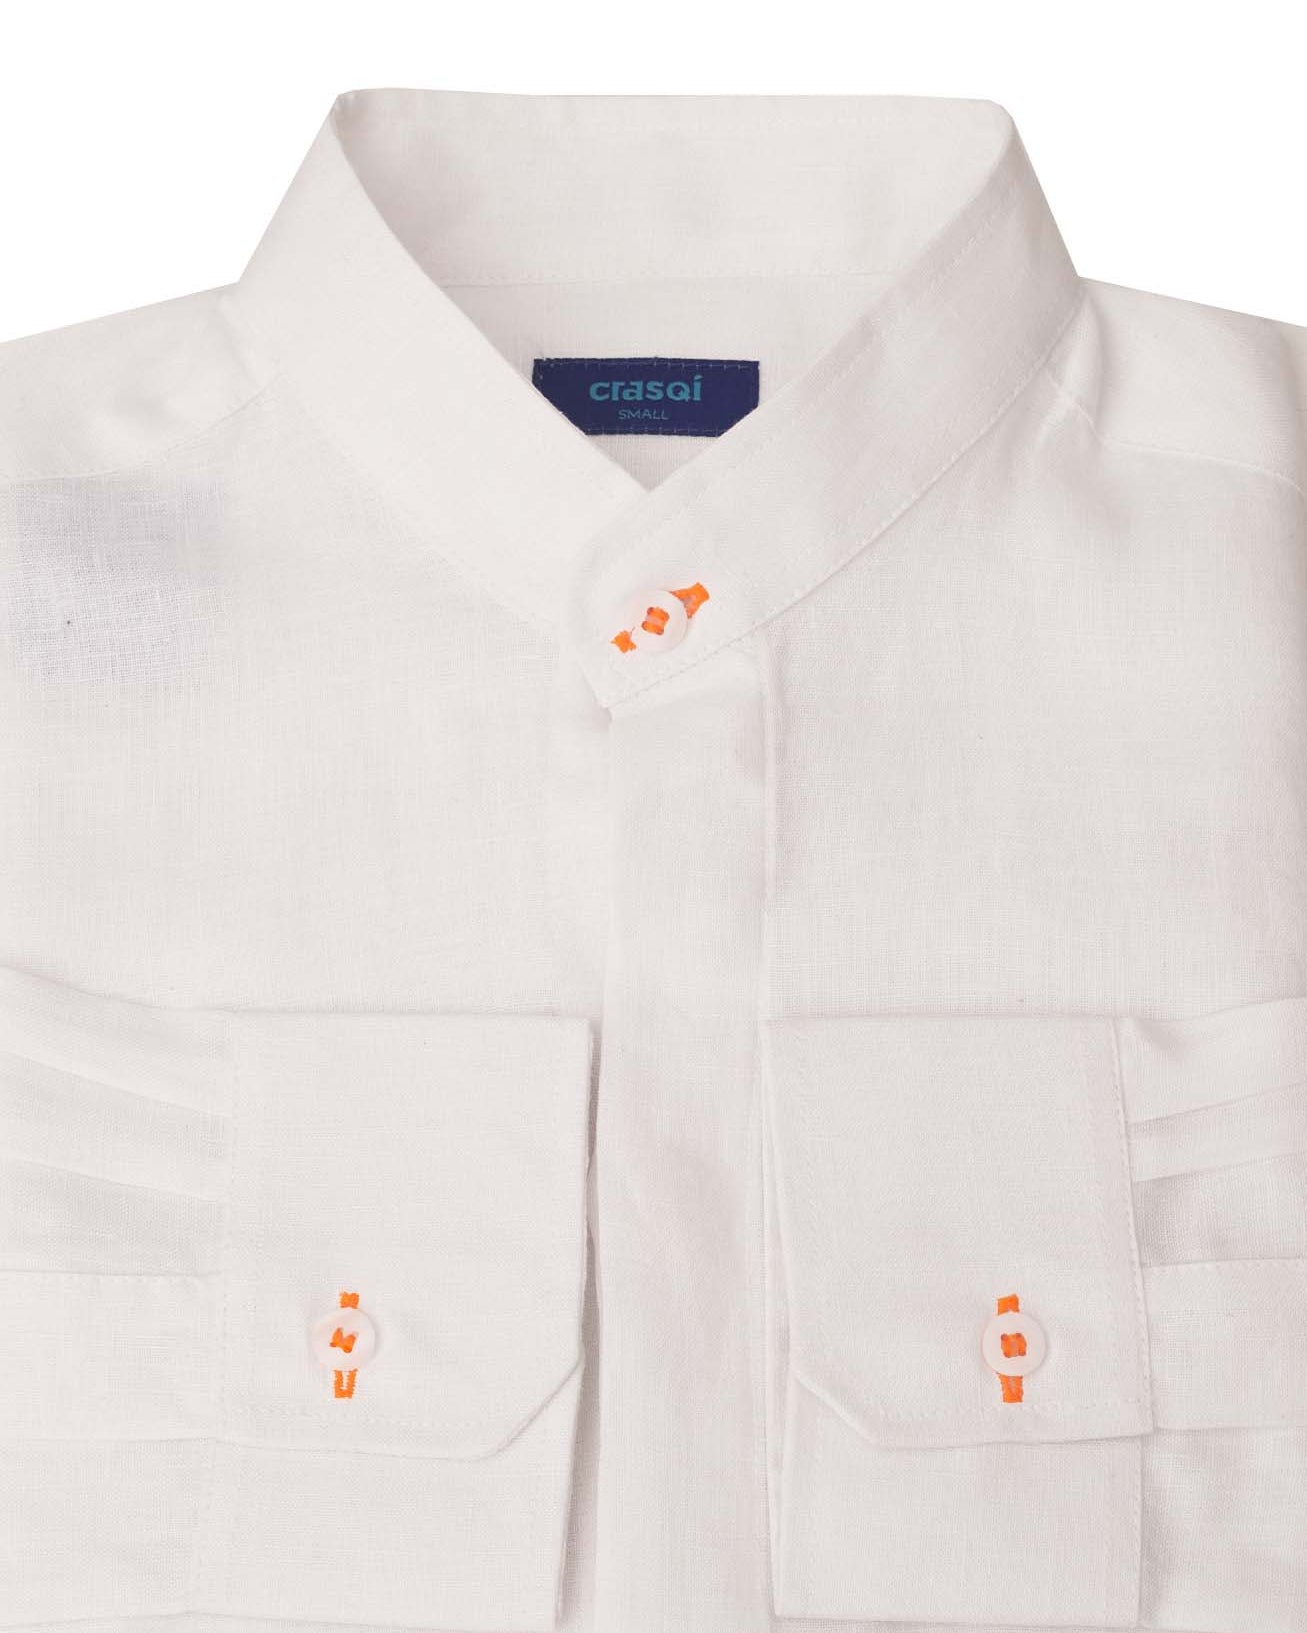 MENORCA Linen Shirt - White/Neon Orange - CRASQI